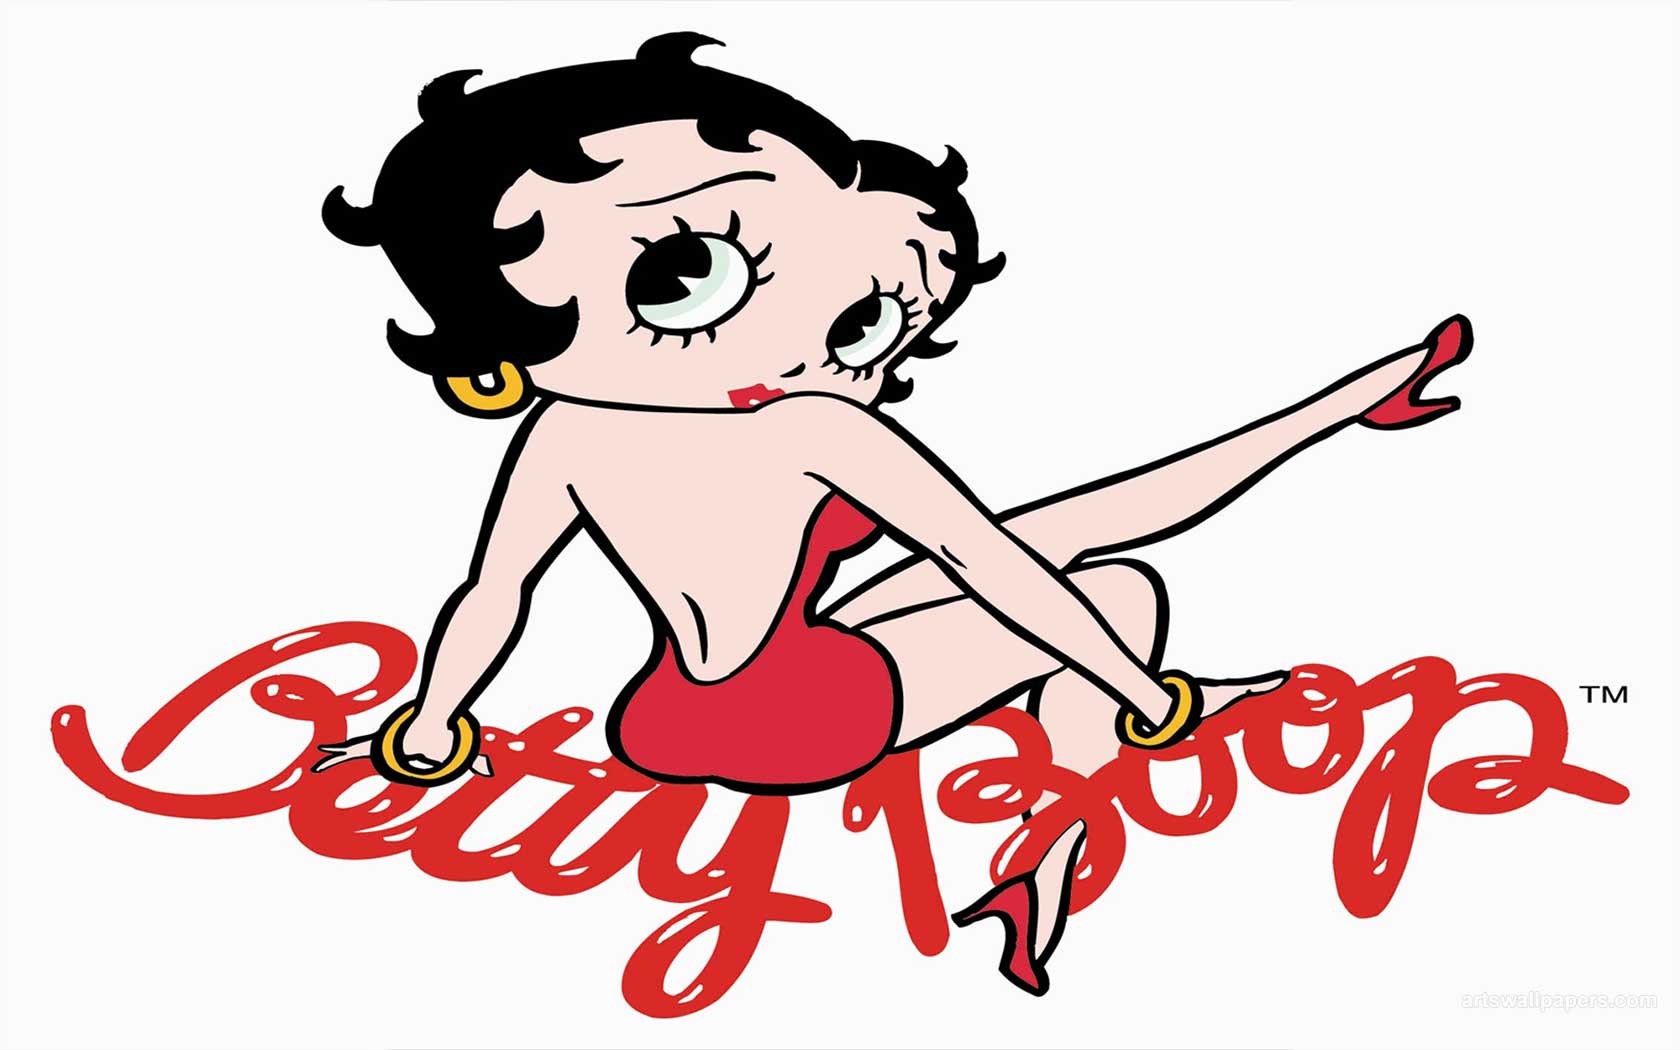 original betty boop logo